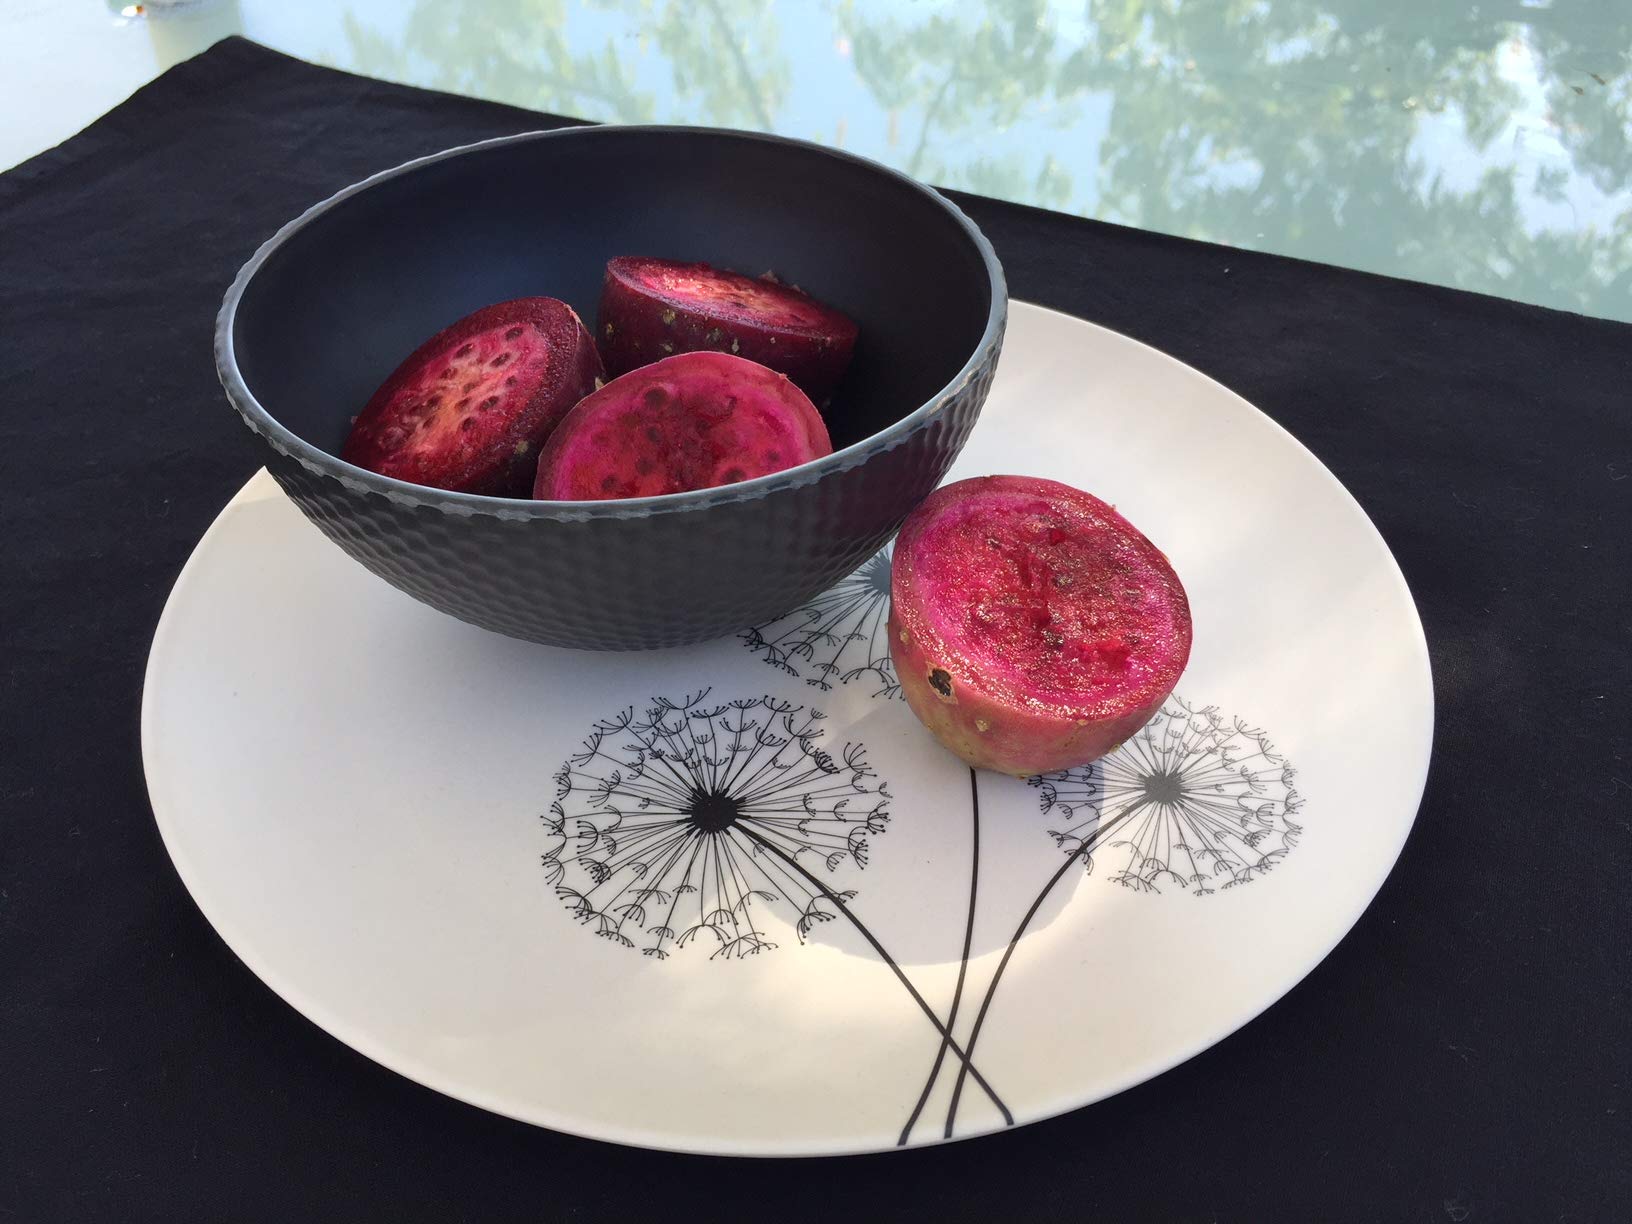 Aquaterra Living Ecofriendly Dinner Plate Set with Dandelion Designs- Set of 6, 10" indoor or outdoor plates